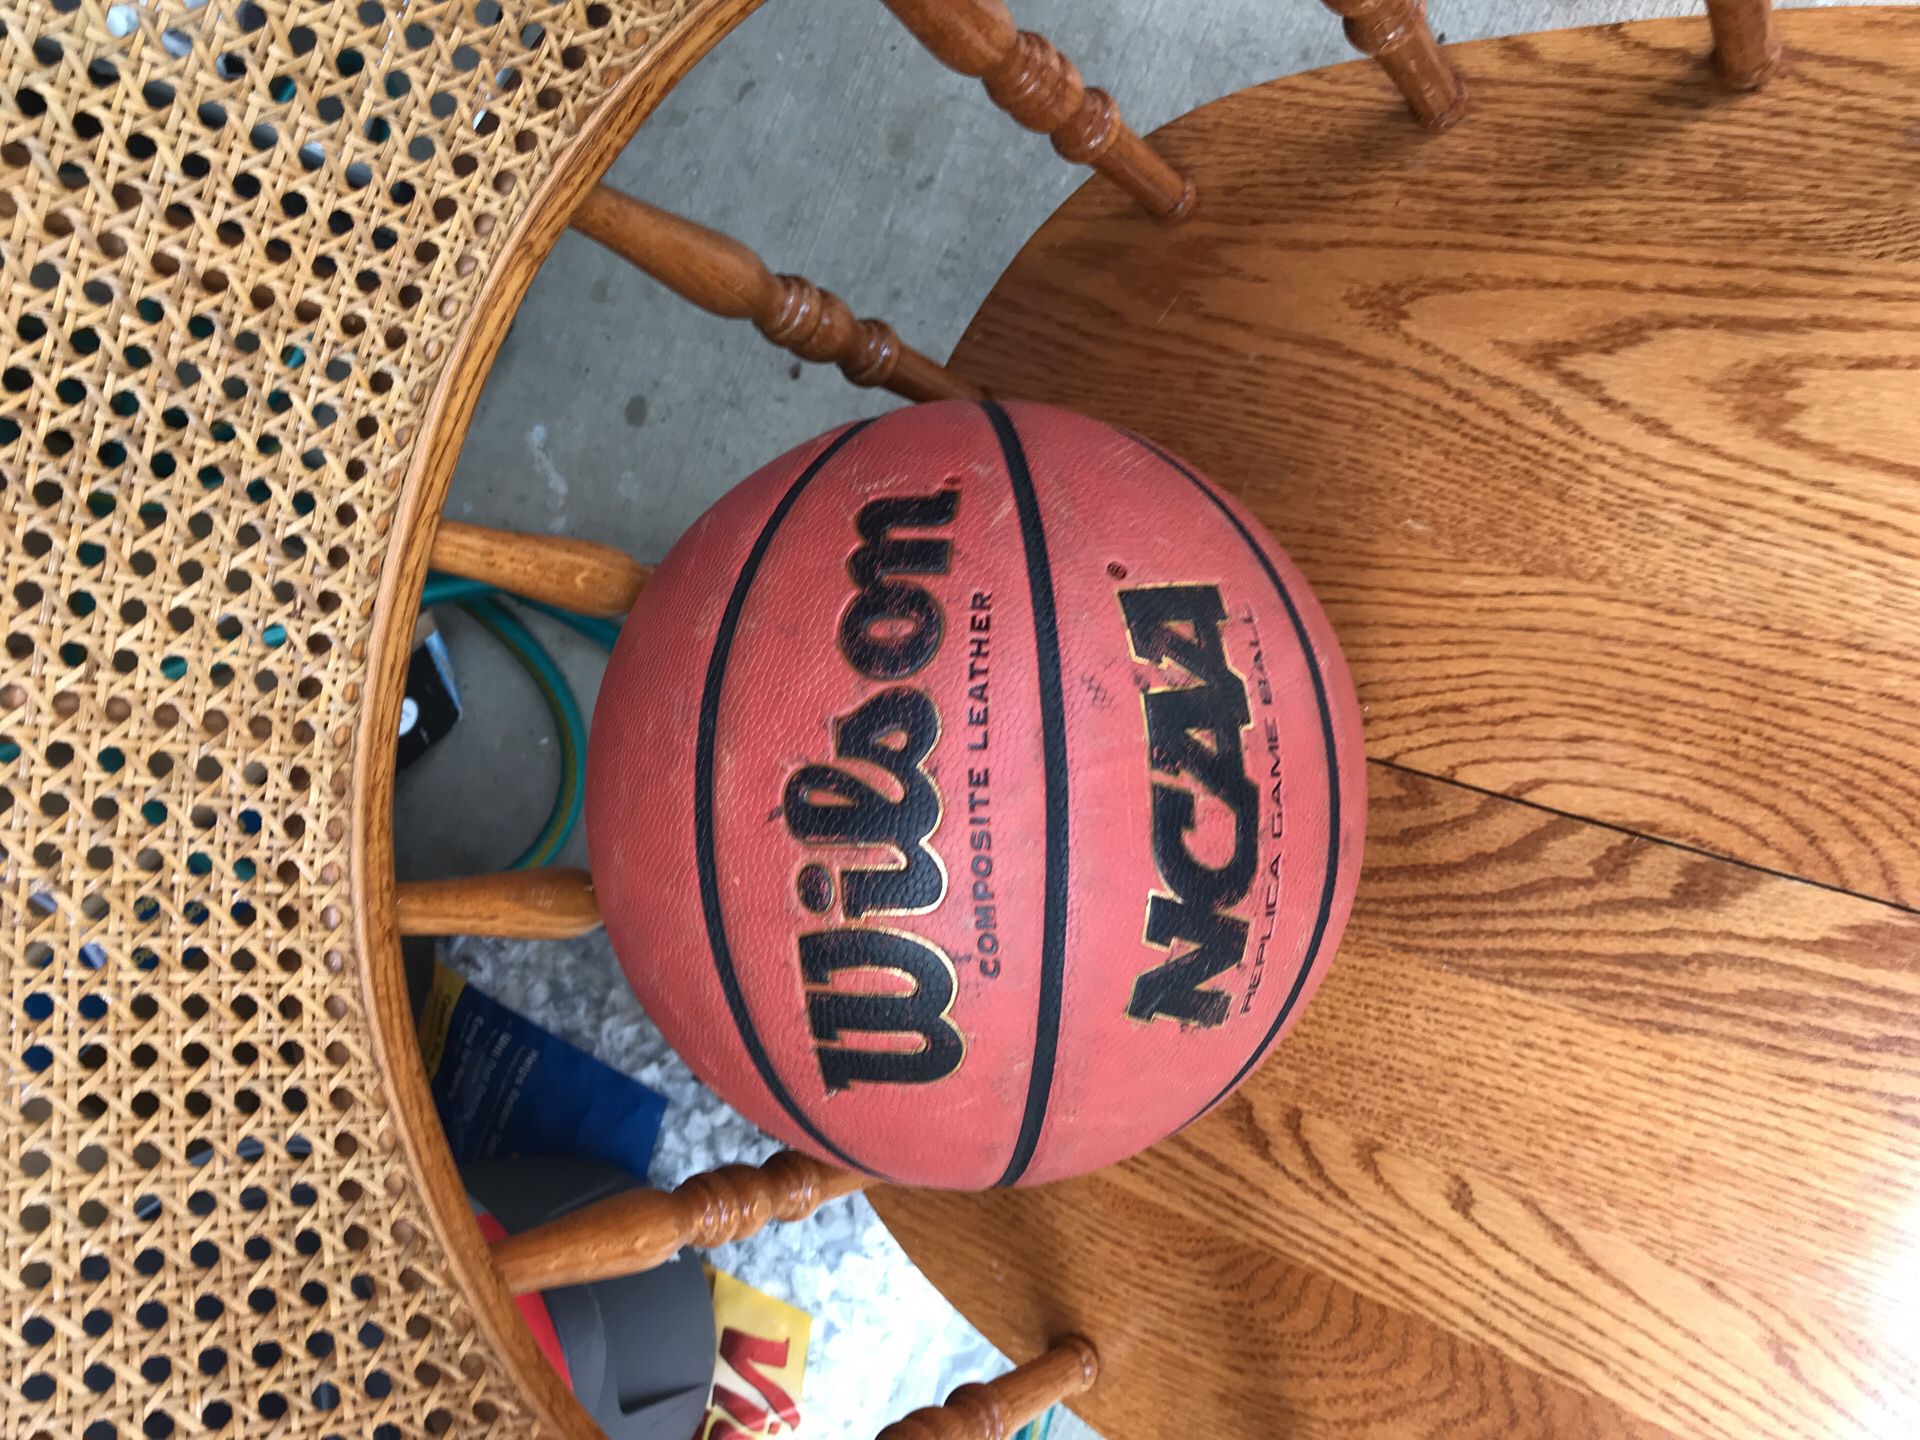 A Wilson indoor basketball.